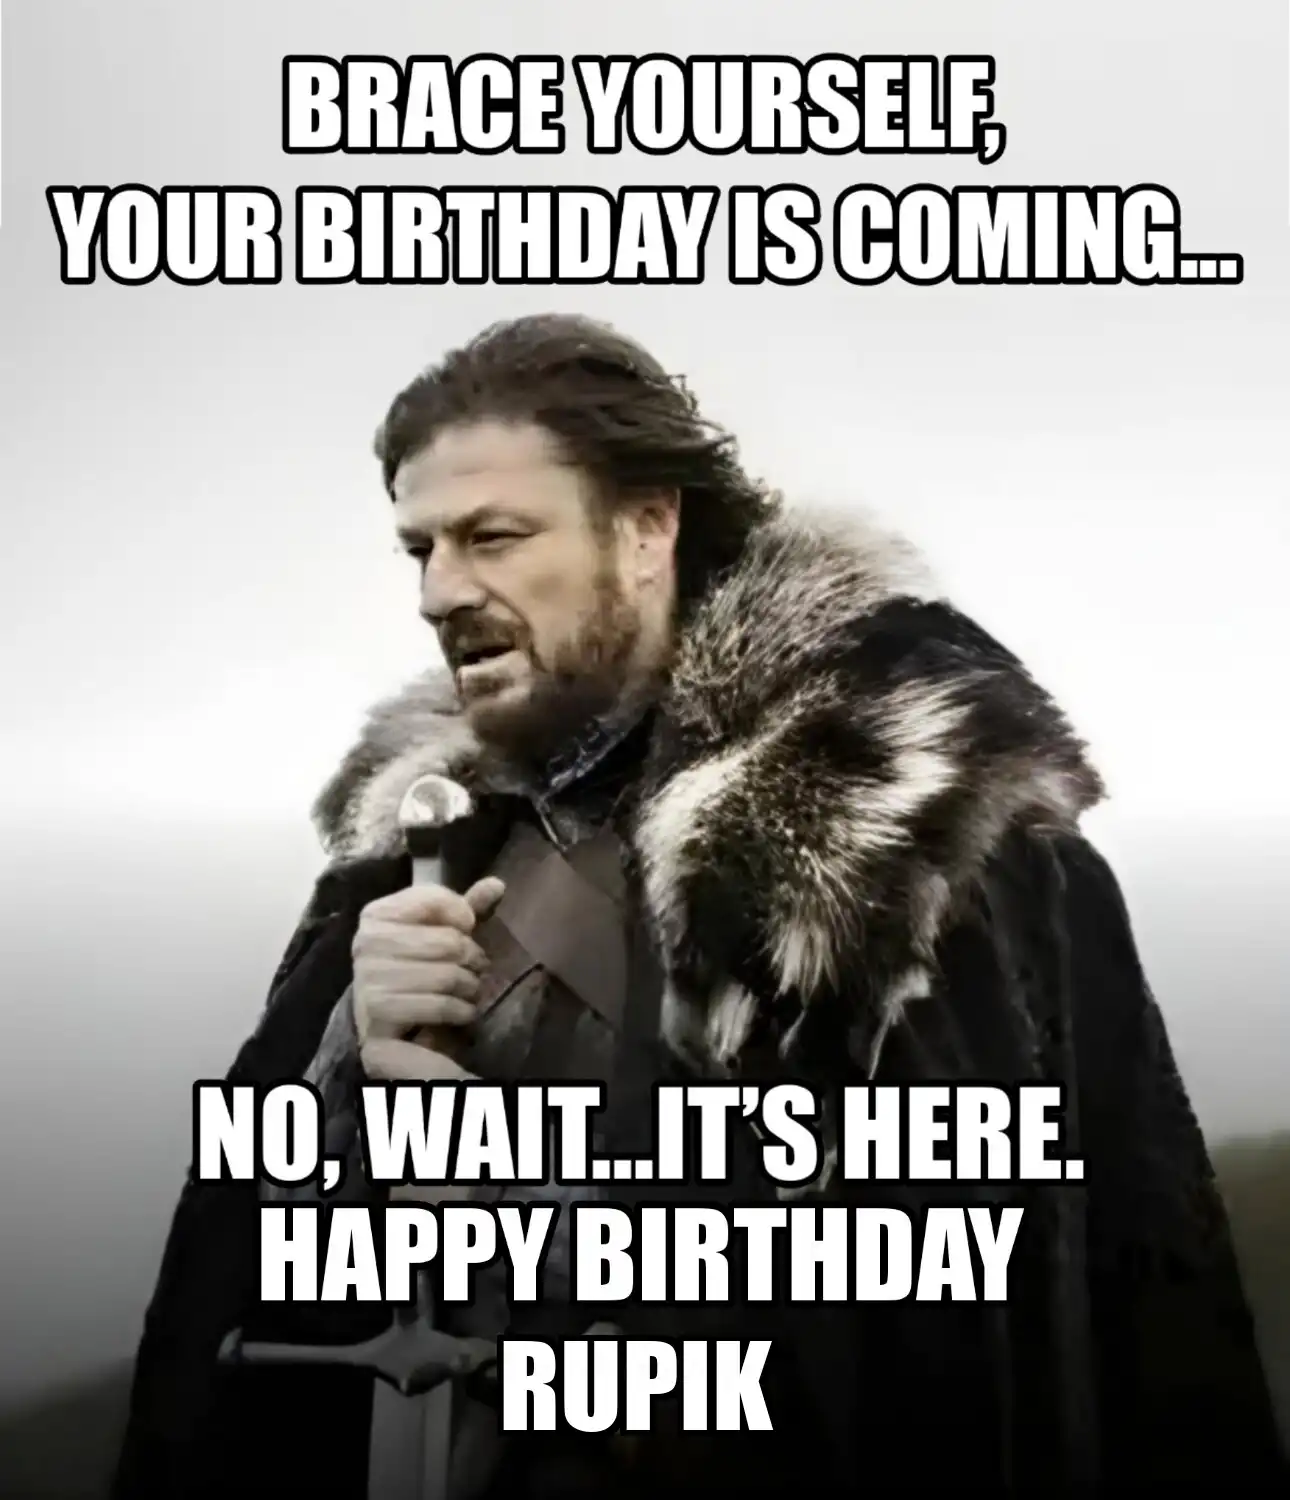 Happy Birthday Rupik Brace Yourself Your Birthday Is Coming Meme